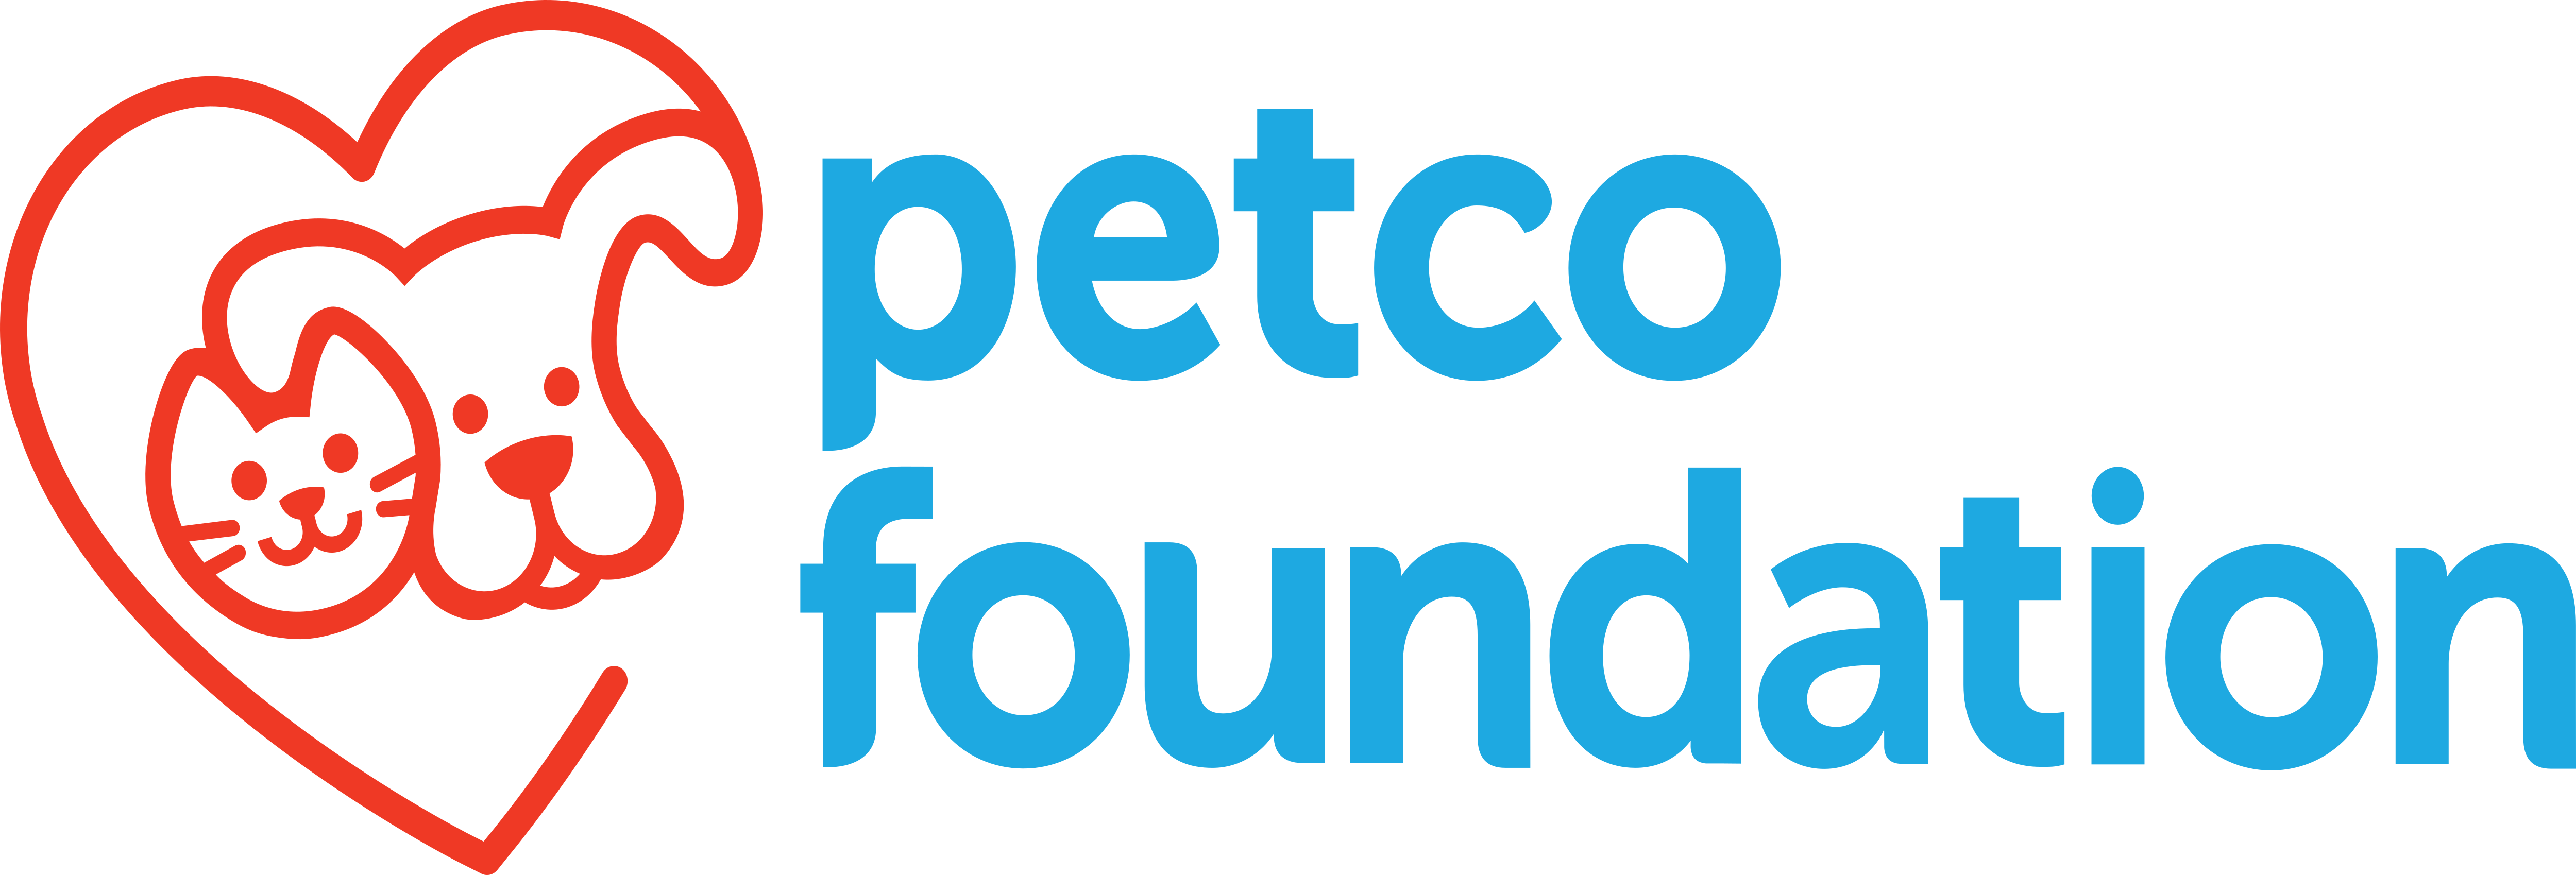 Petco Foundation Logos Download